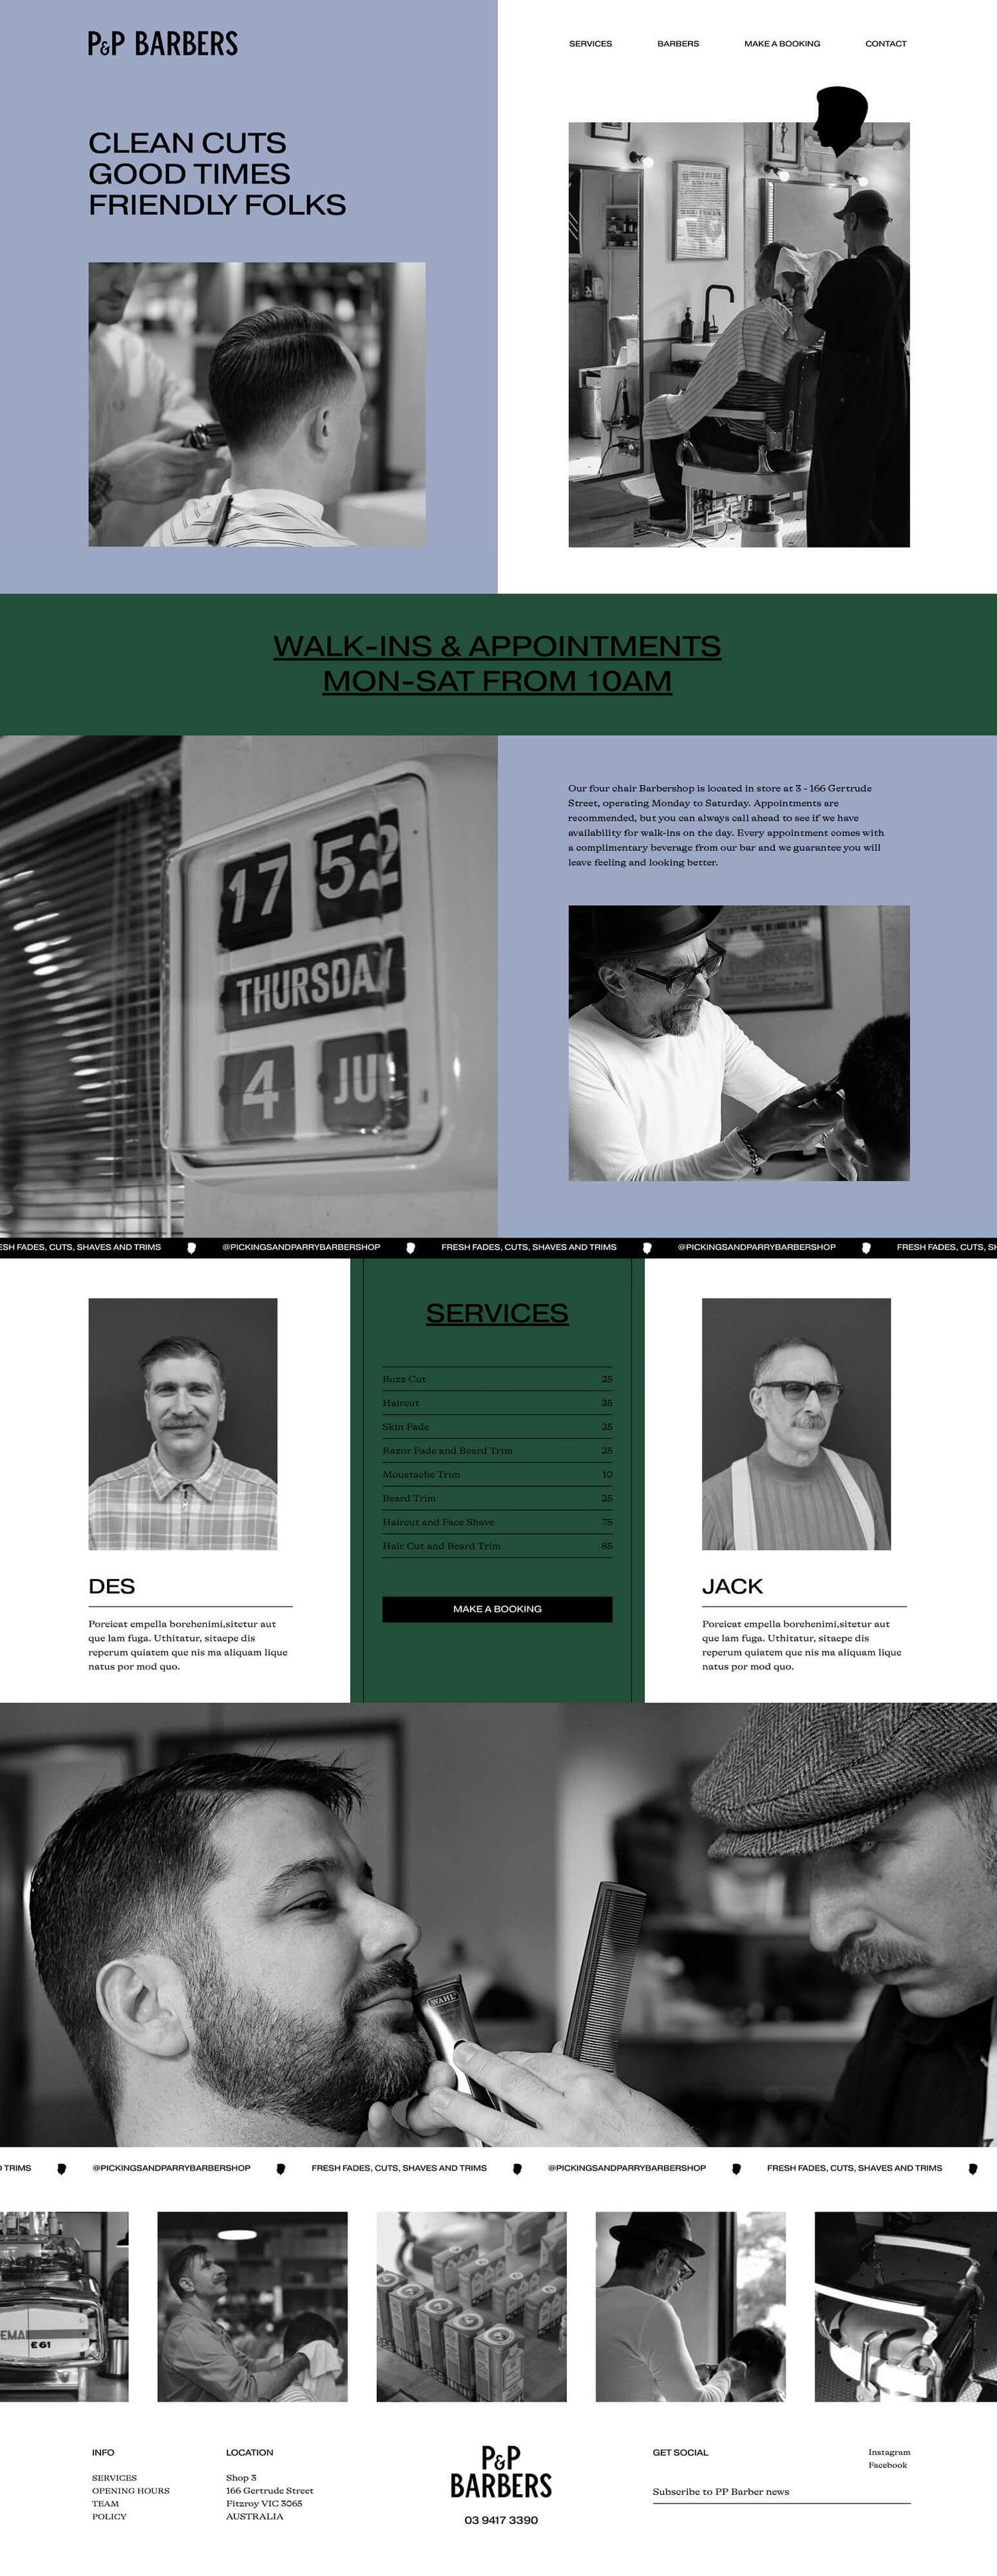 PP Barbers - Brand & Website - UX Desktop Mockup | Atollon - a design company